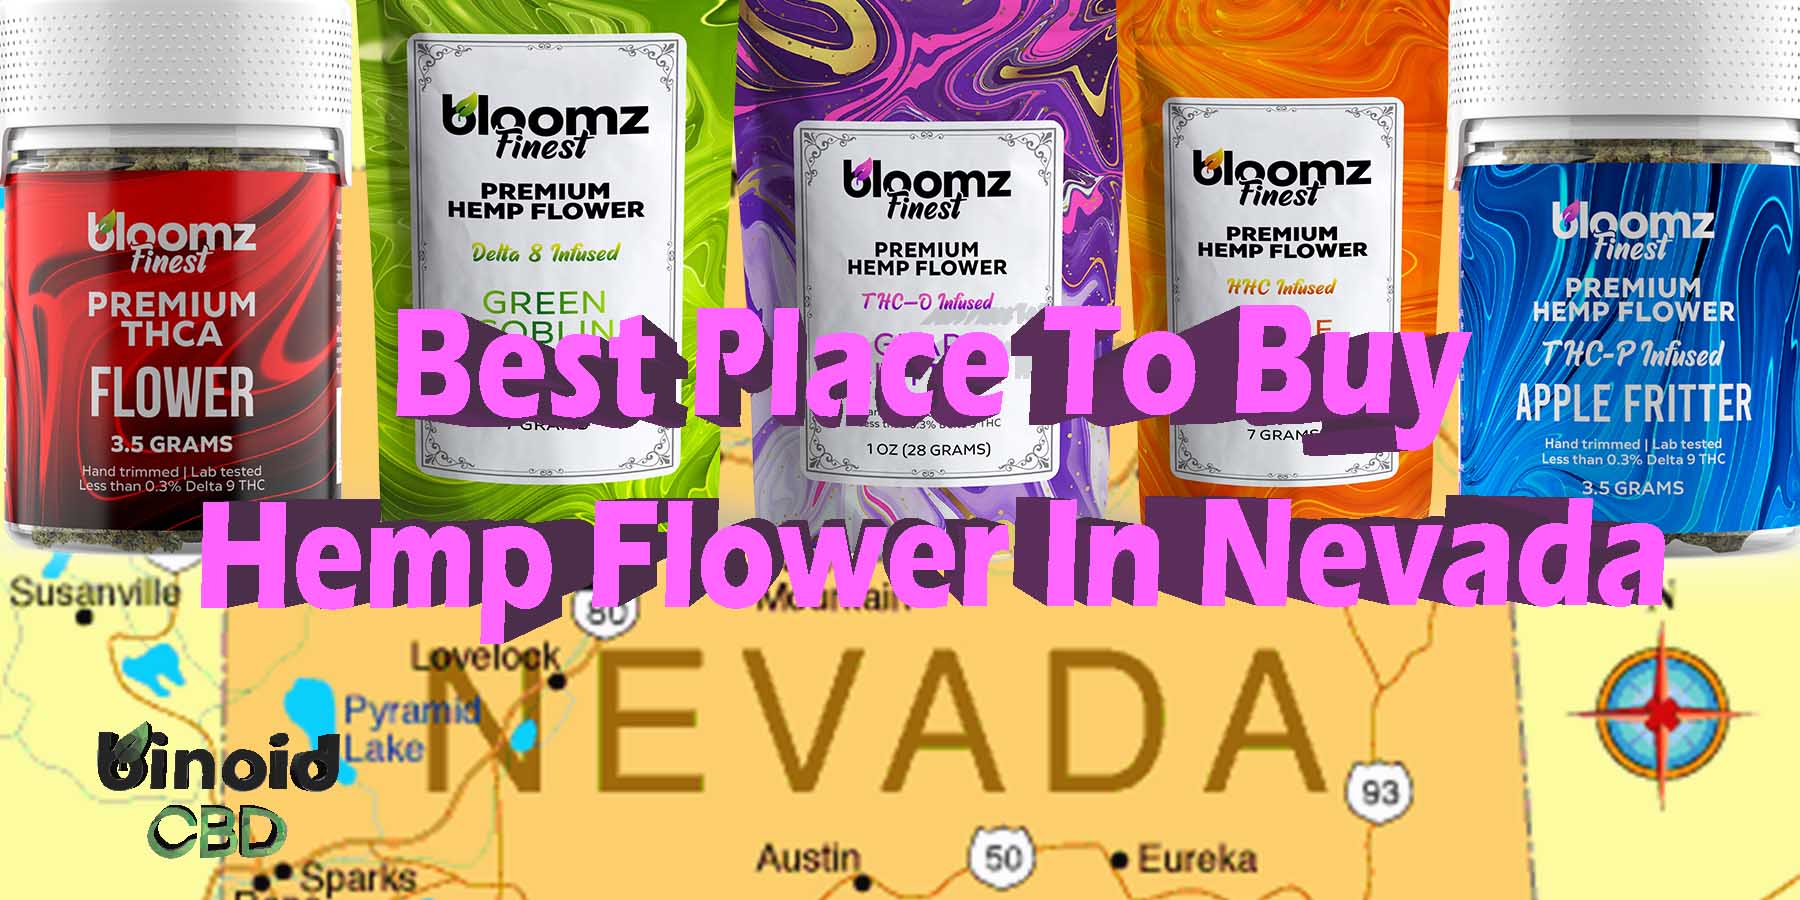 Buy Hemp Flower Nevada Joints PreRolls Get Online Near Me For Sale Best Brand Strongest Real Legal Store Shop Reddit